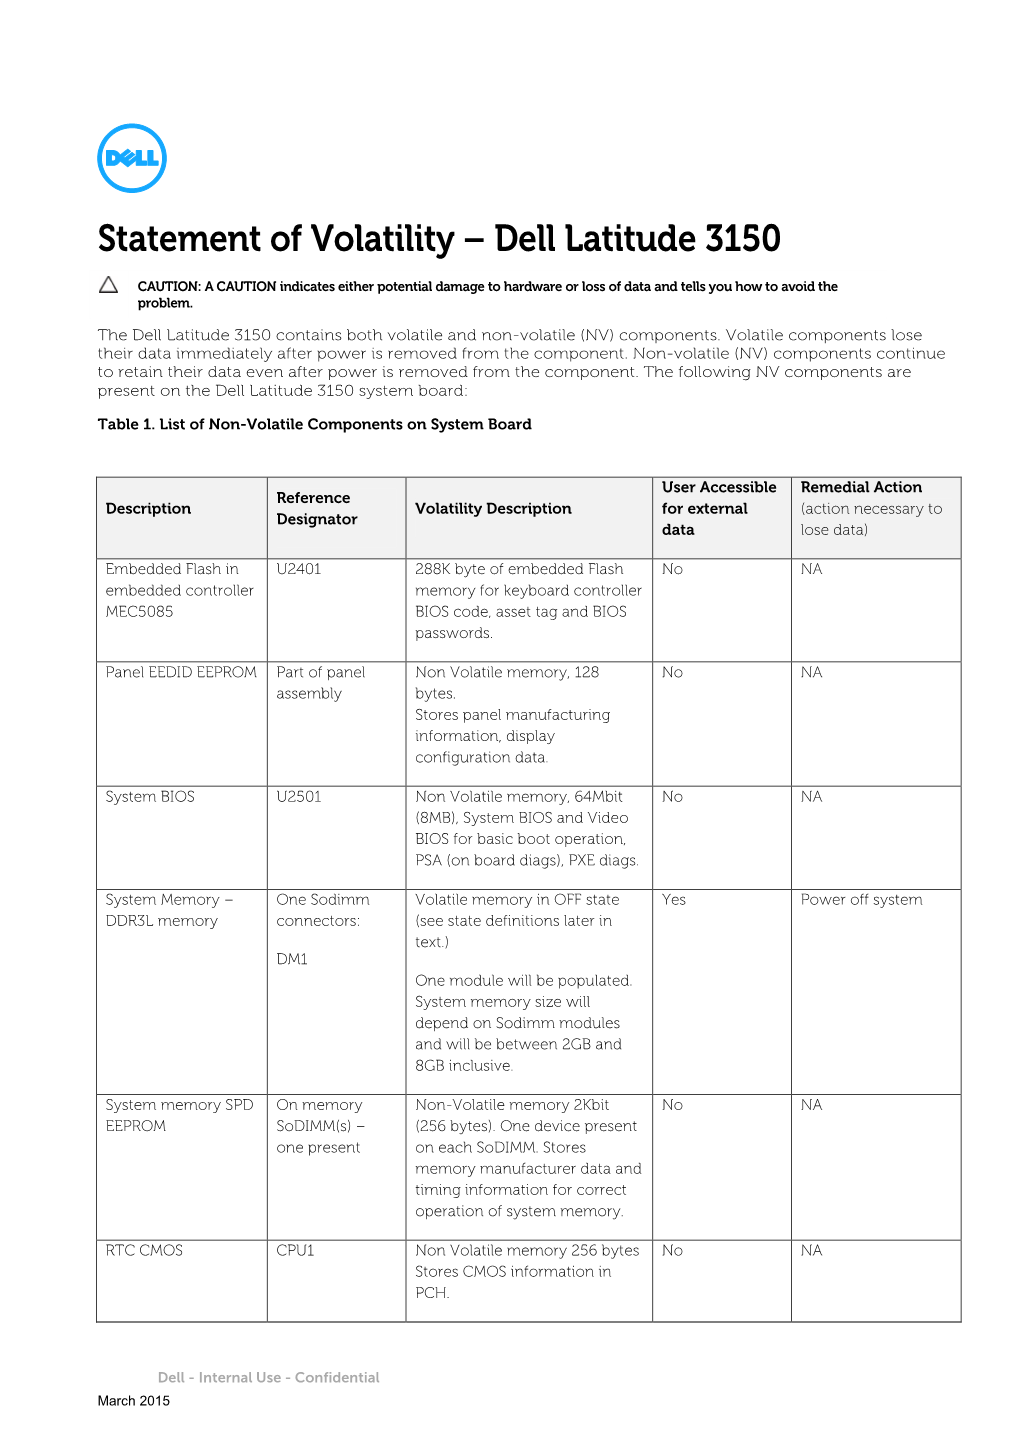 Dell Latitude 3150 Statement of Volatility